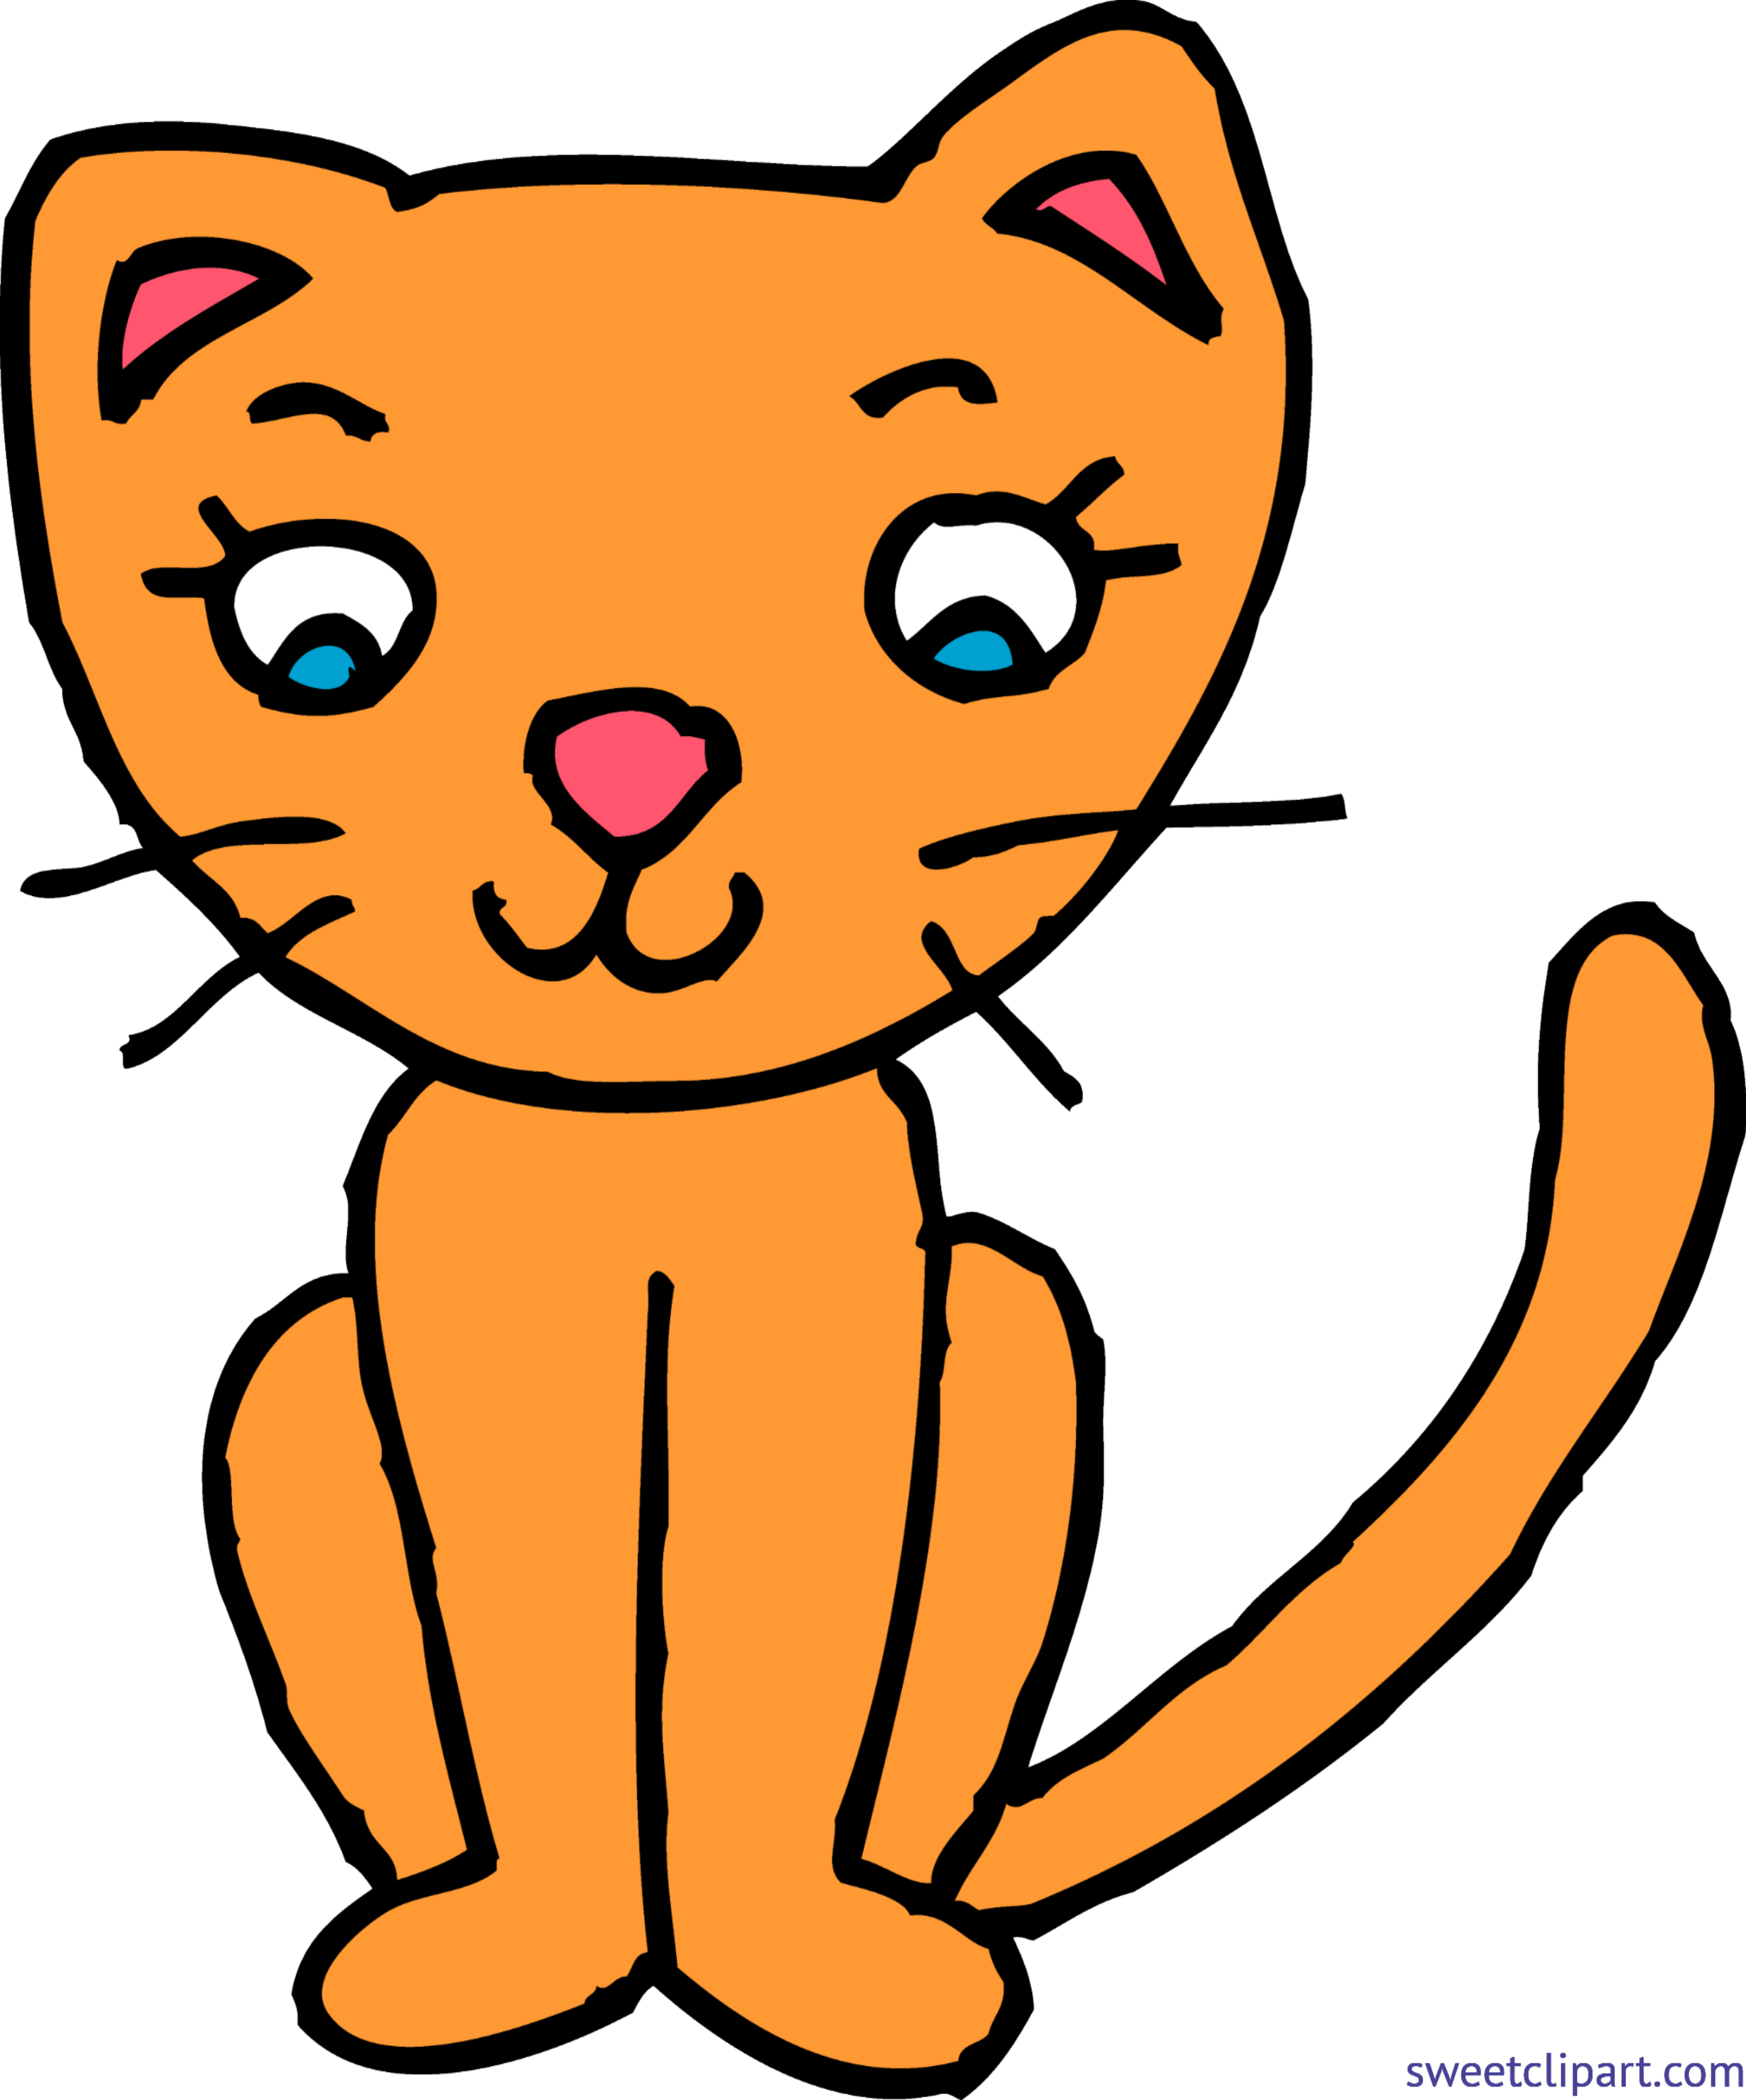 Orange clip art sweet. Kitty clipart baby cat